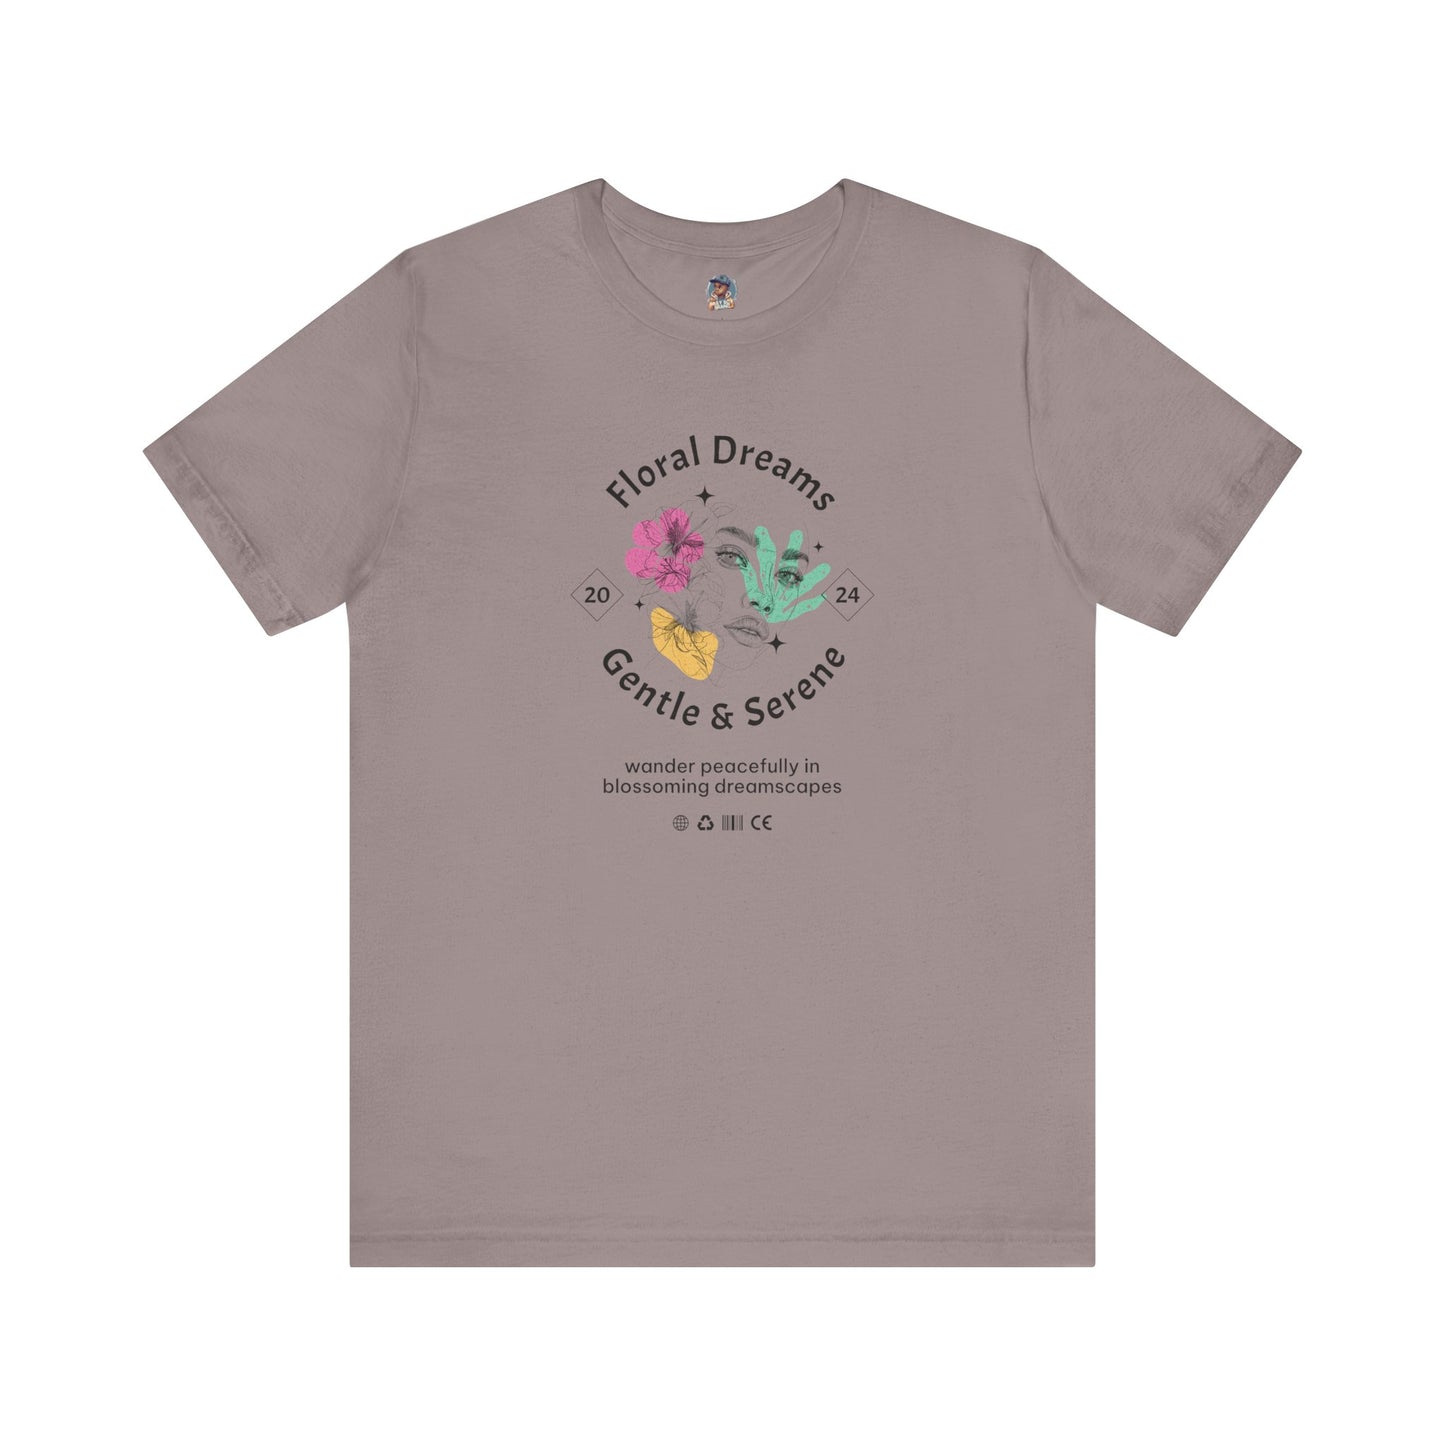 "Floral Dreams T-shirt"